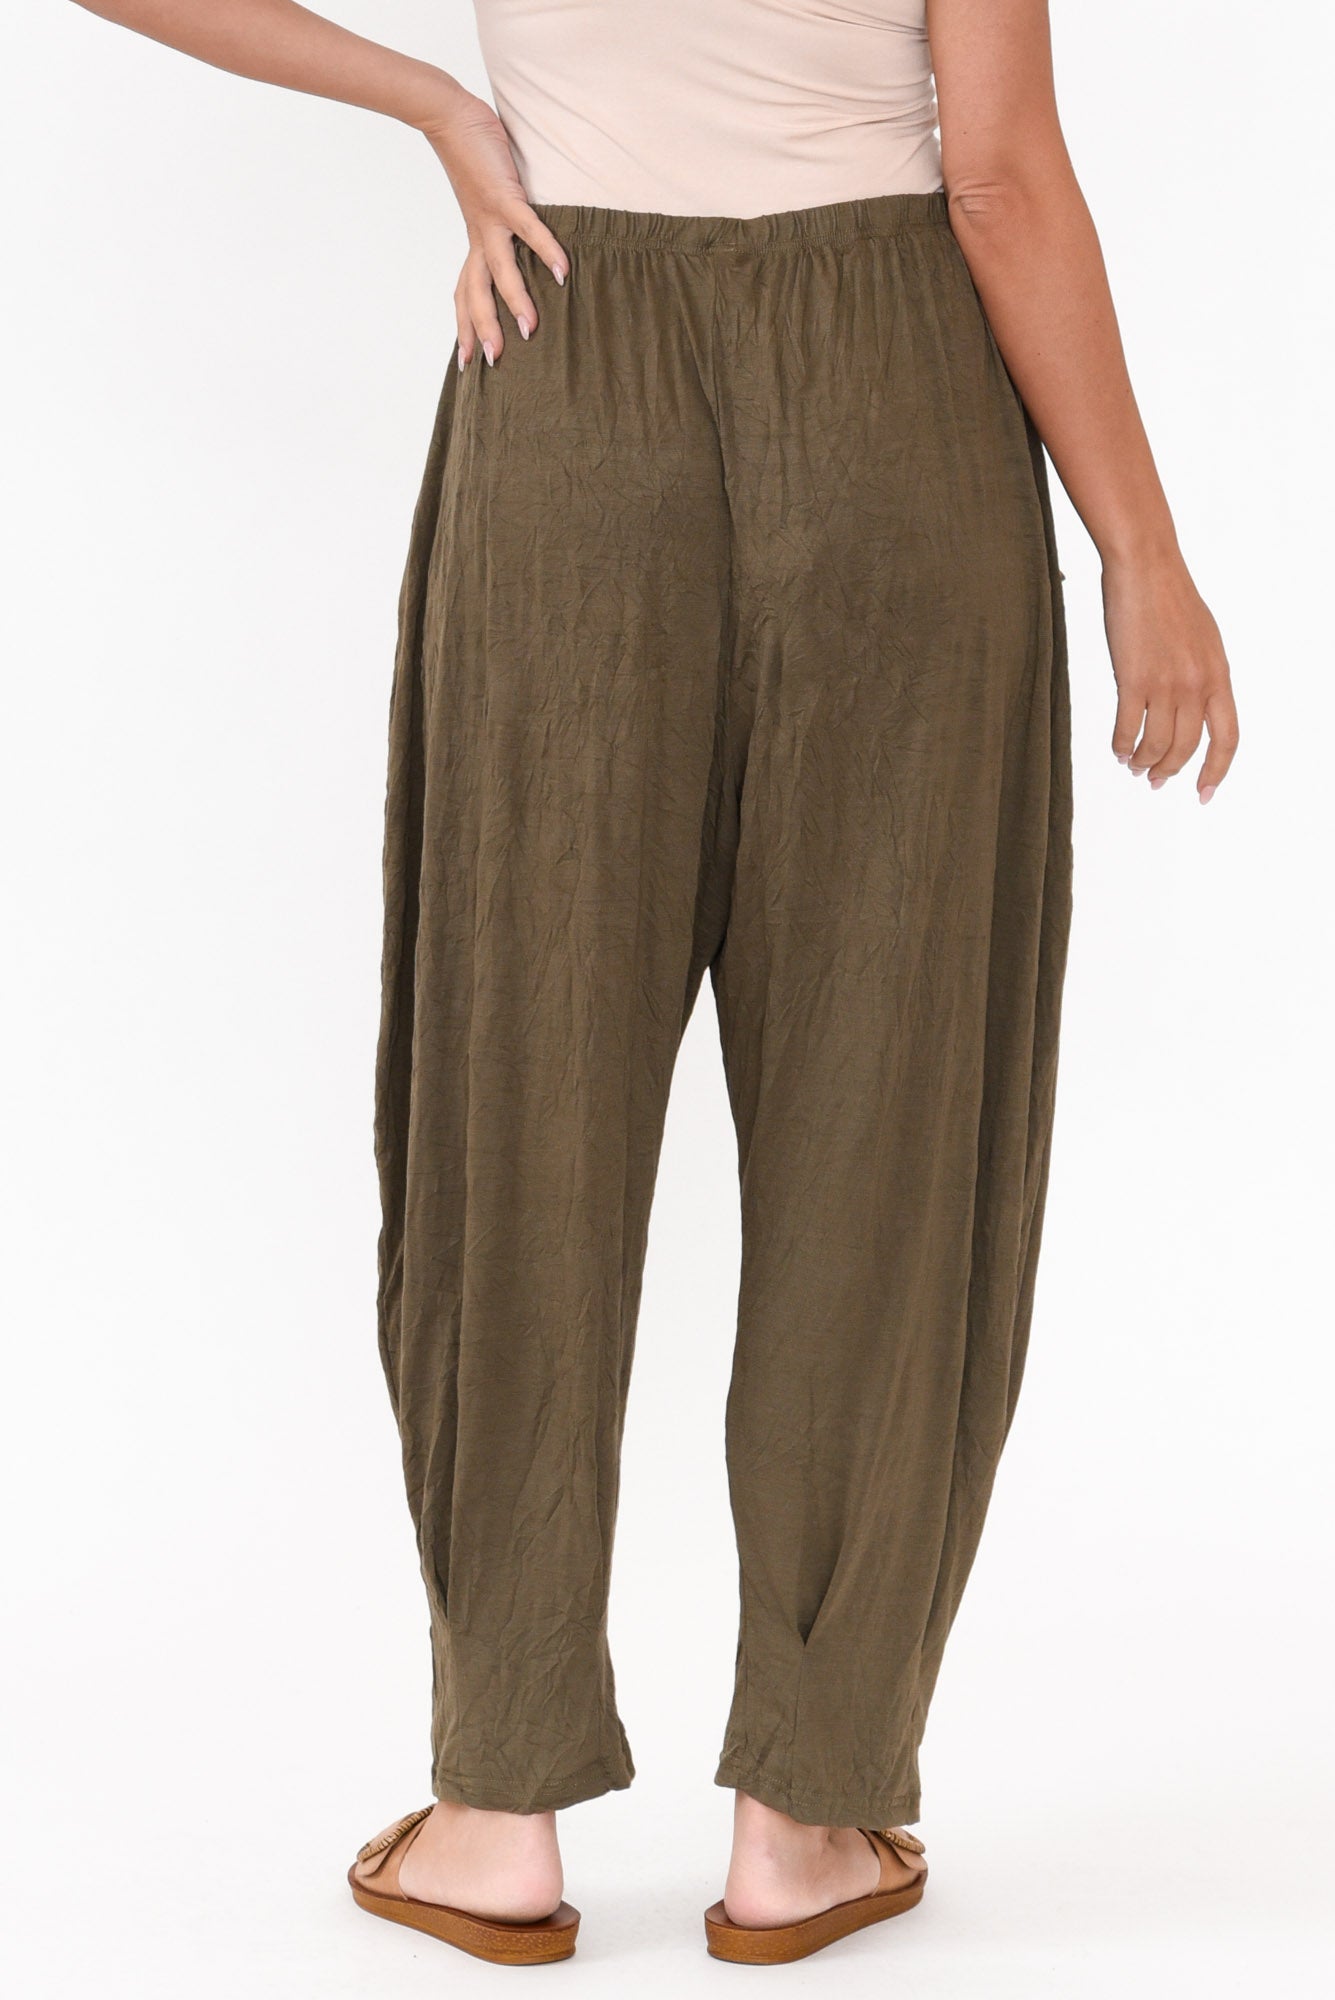 Summer Harem Pants - Women's Pants Online - Mariposa Clothing NZ - Mariposa